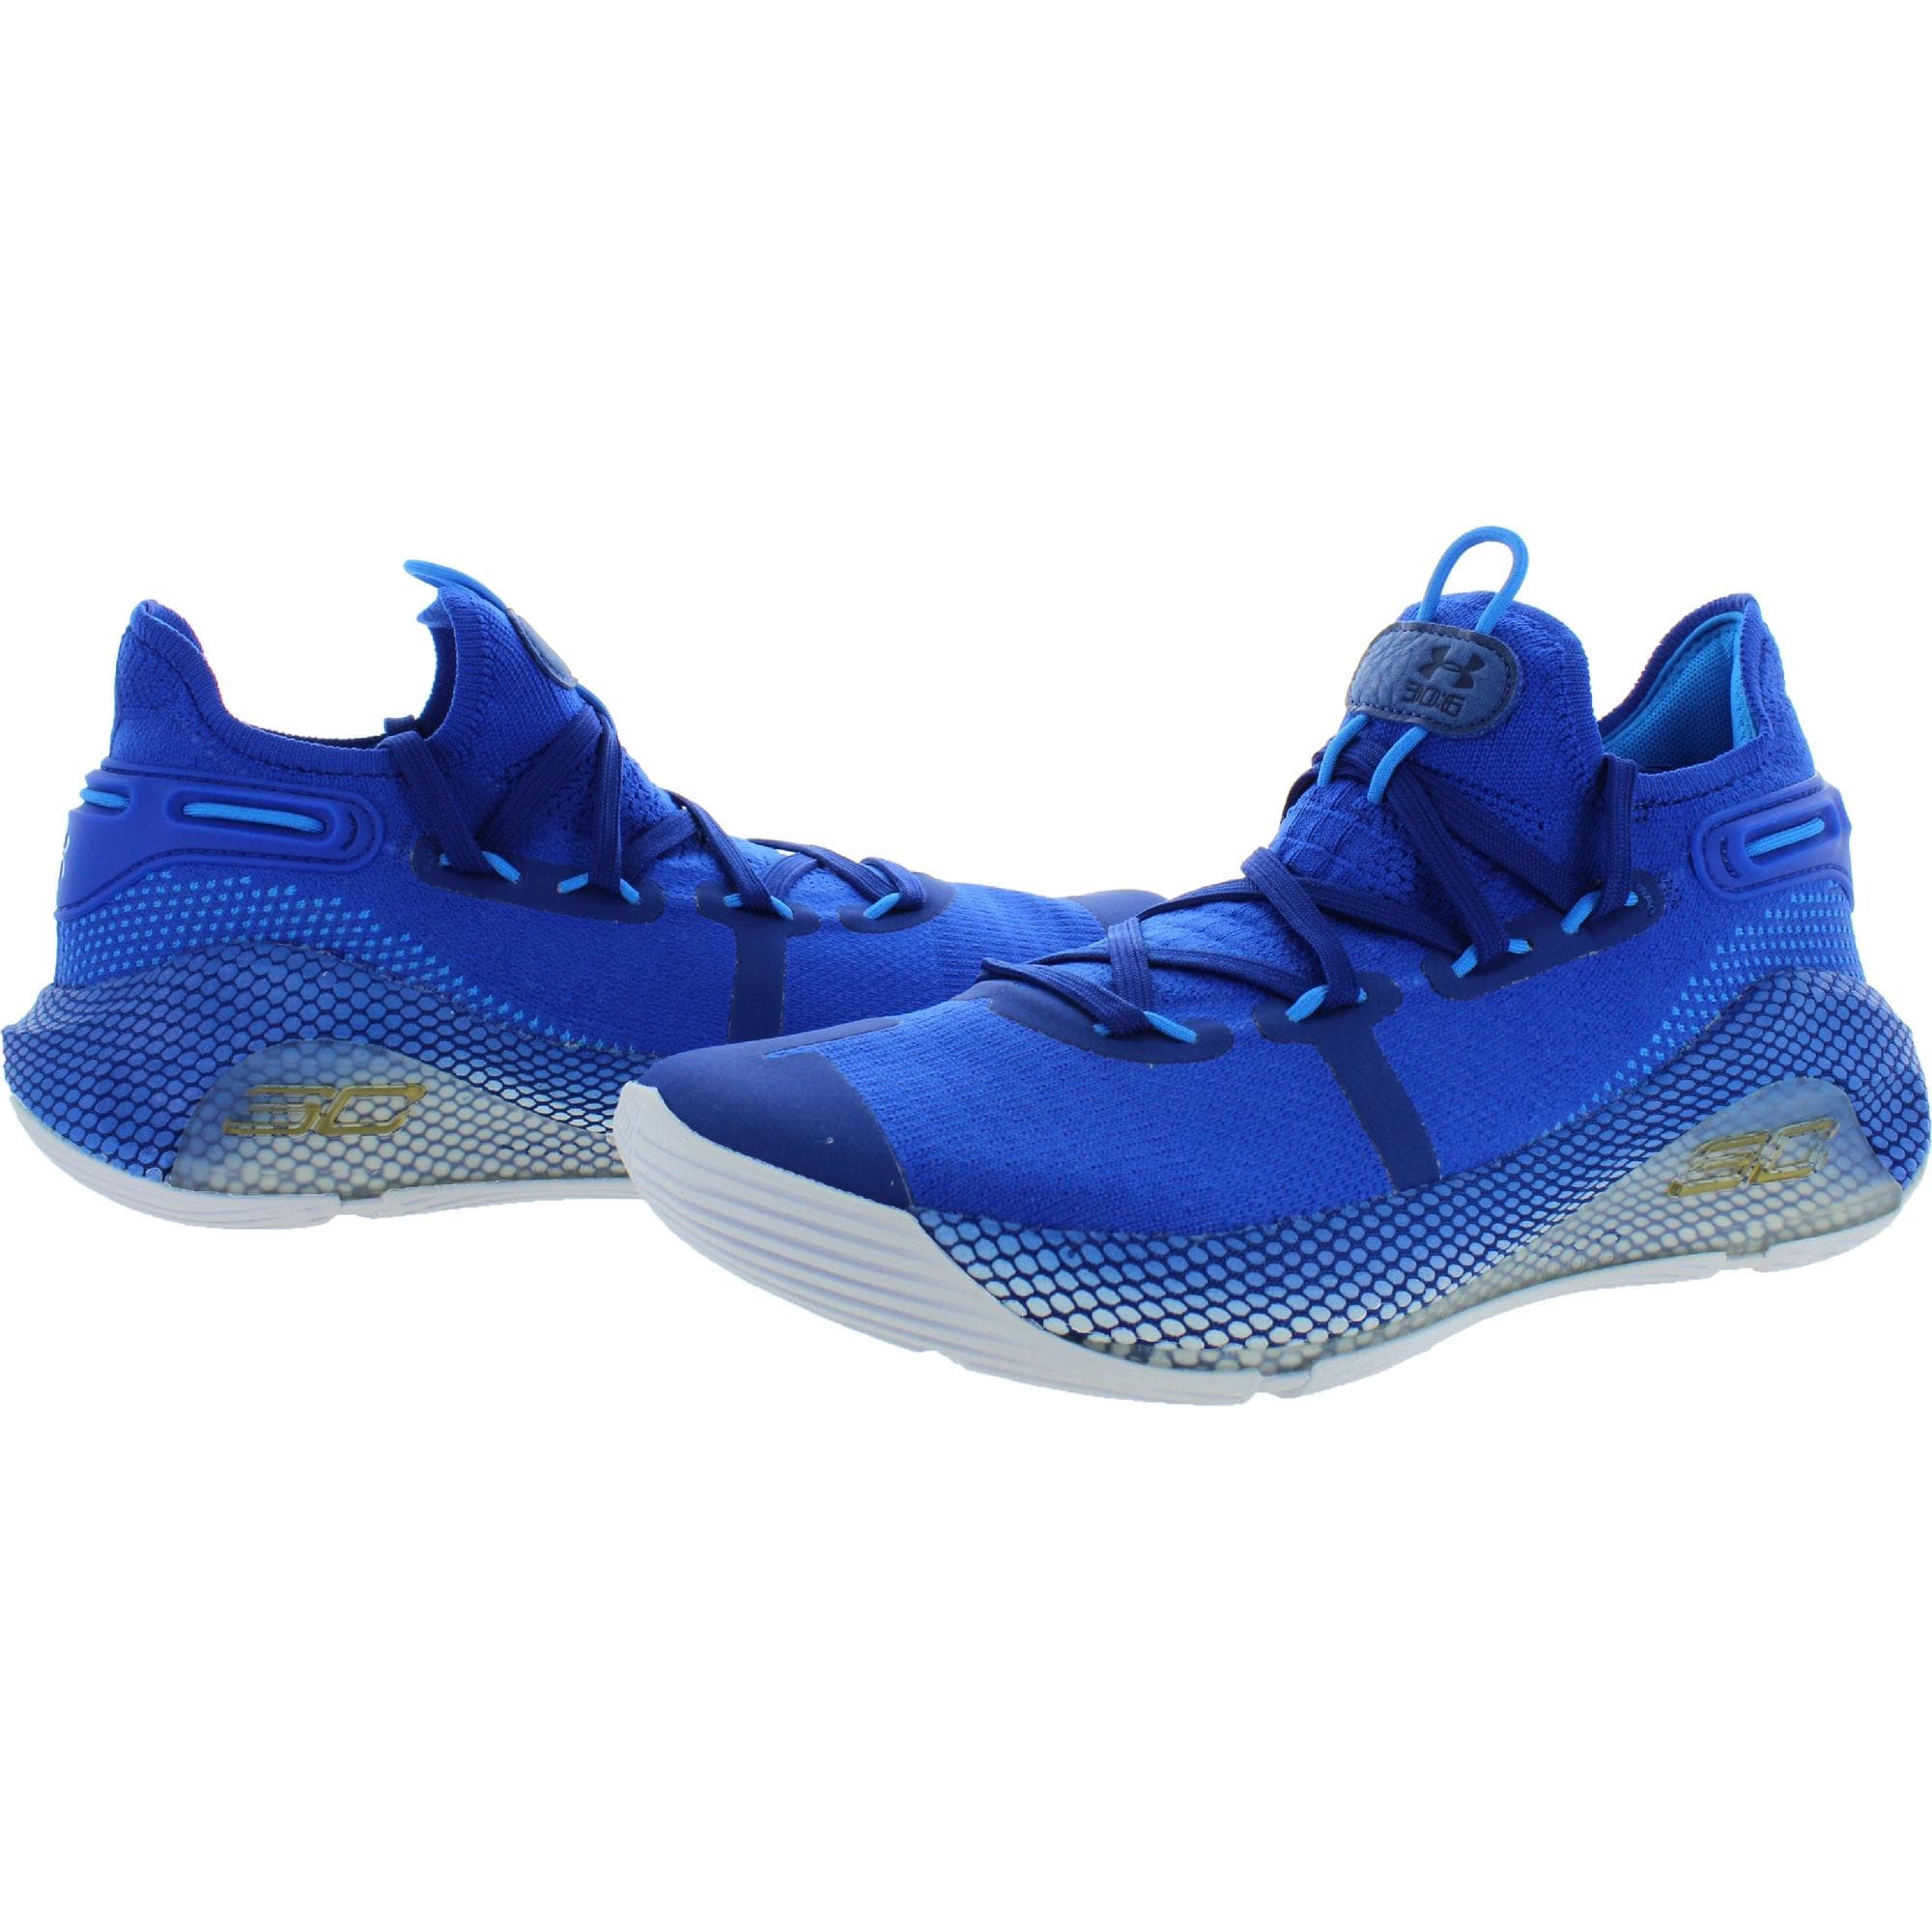 Team Curry 6 Basketball Shoes Gym Sport 